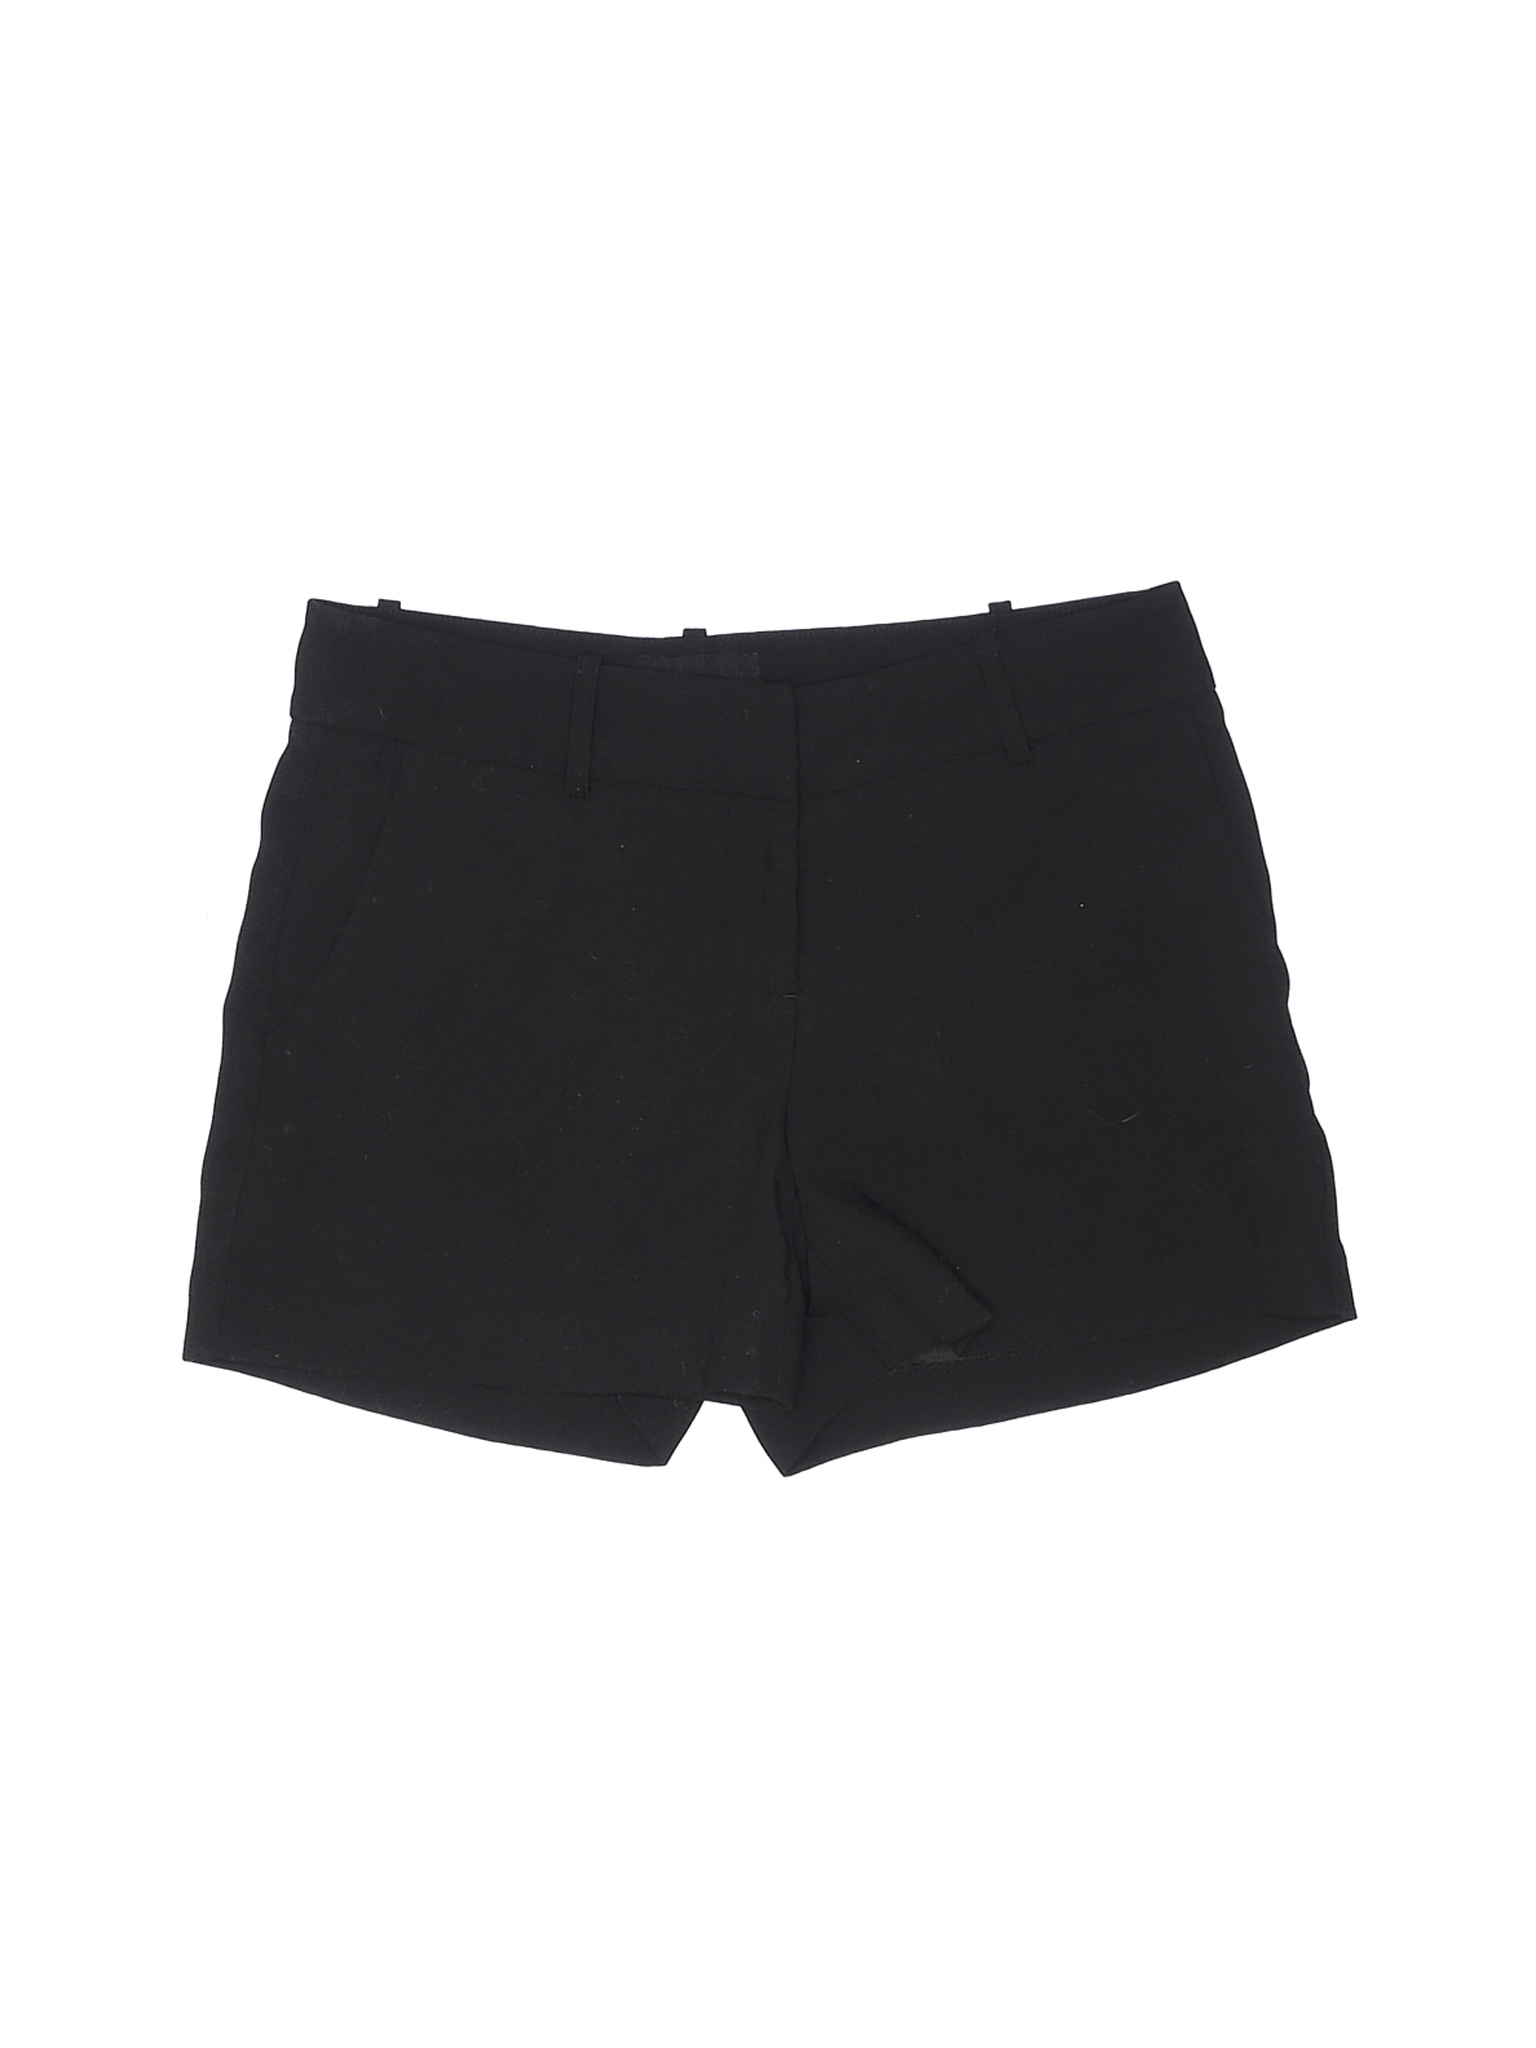 Cynthia Rowley Women Black Shorts 2 | eBay